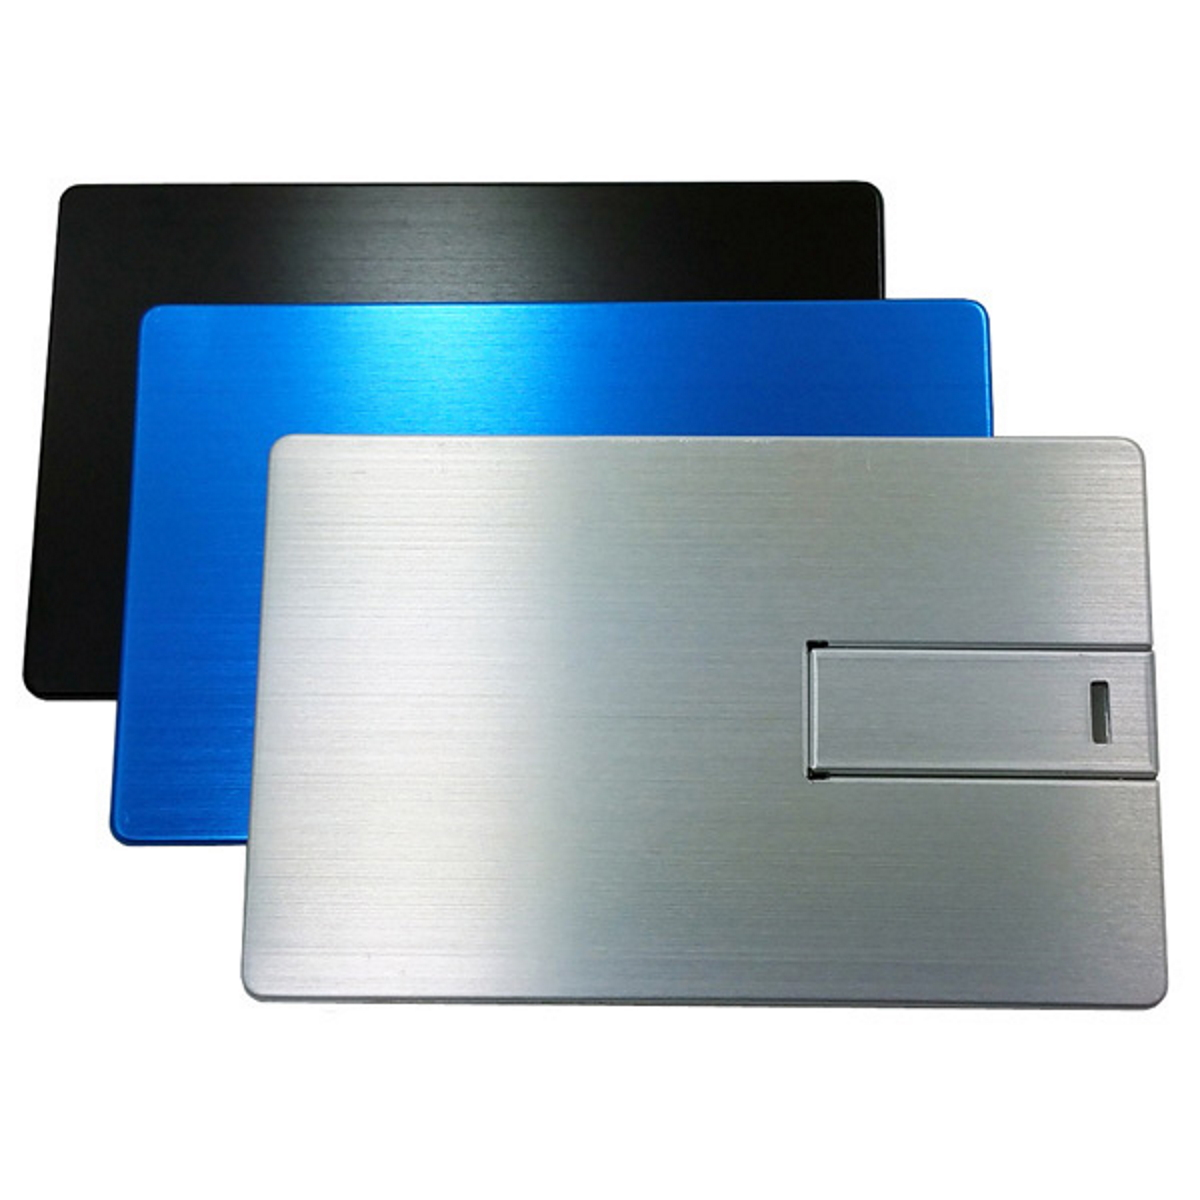 USB GERMANY ® Metall-Kreditkarte (Blau, USB-Stick GB) 4